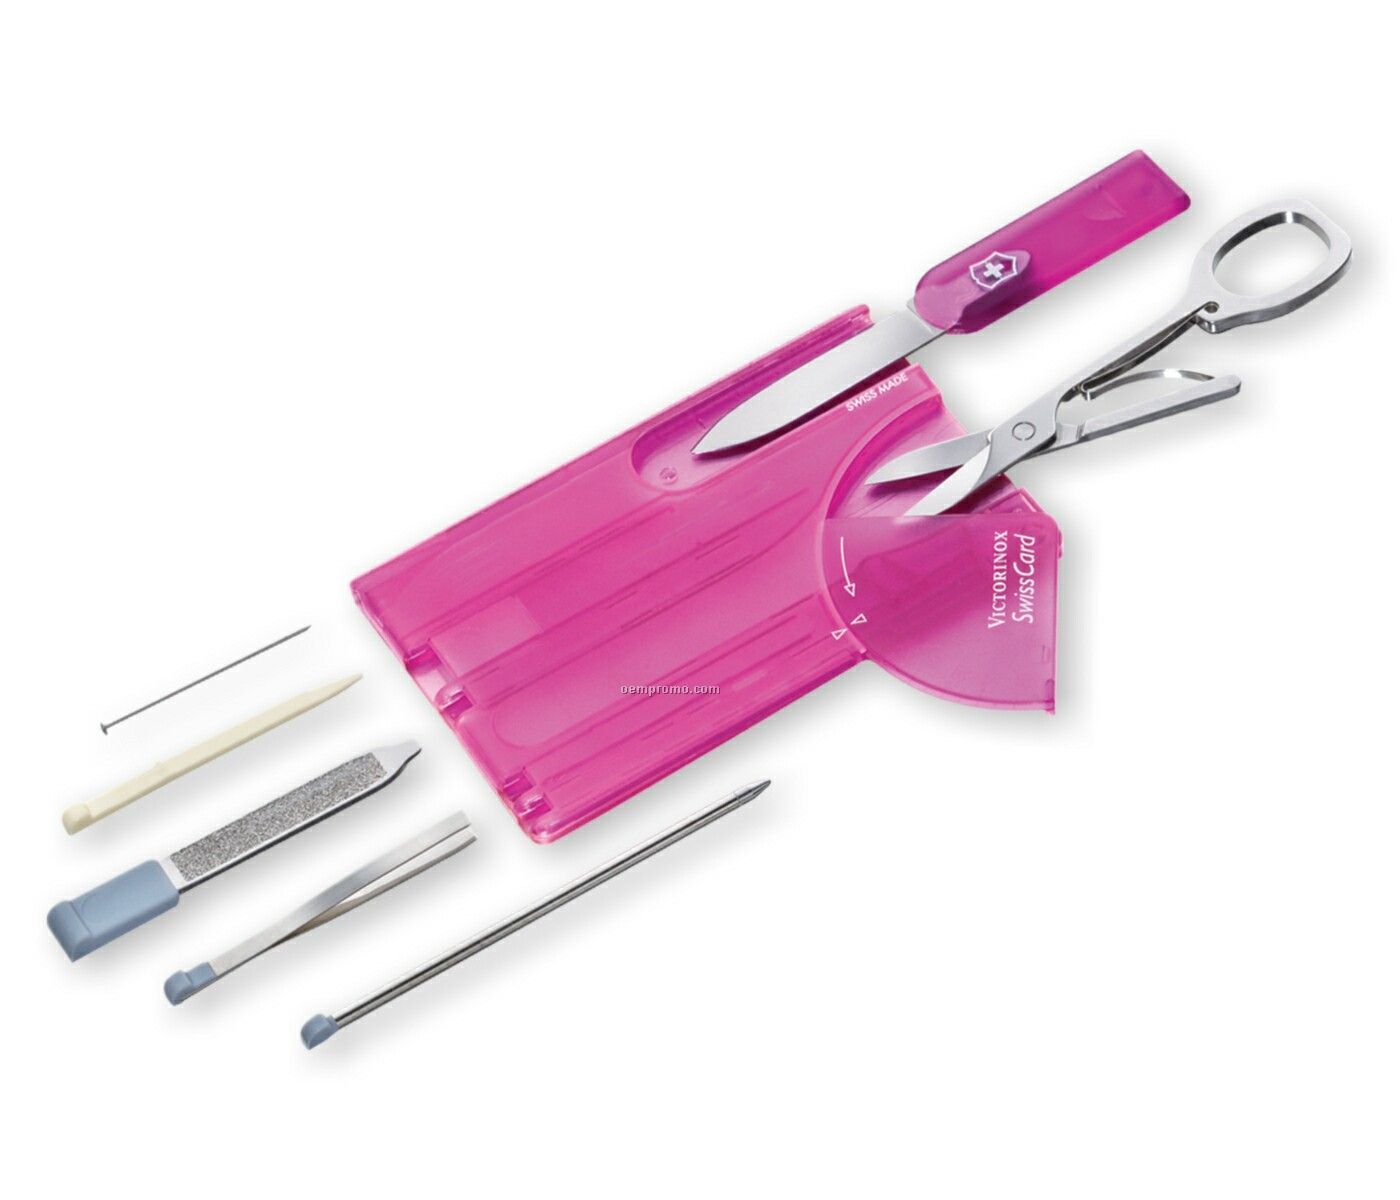 Swiss Army Knife Swisscard Multi-tool - Translucent Pink